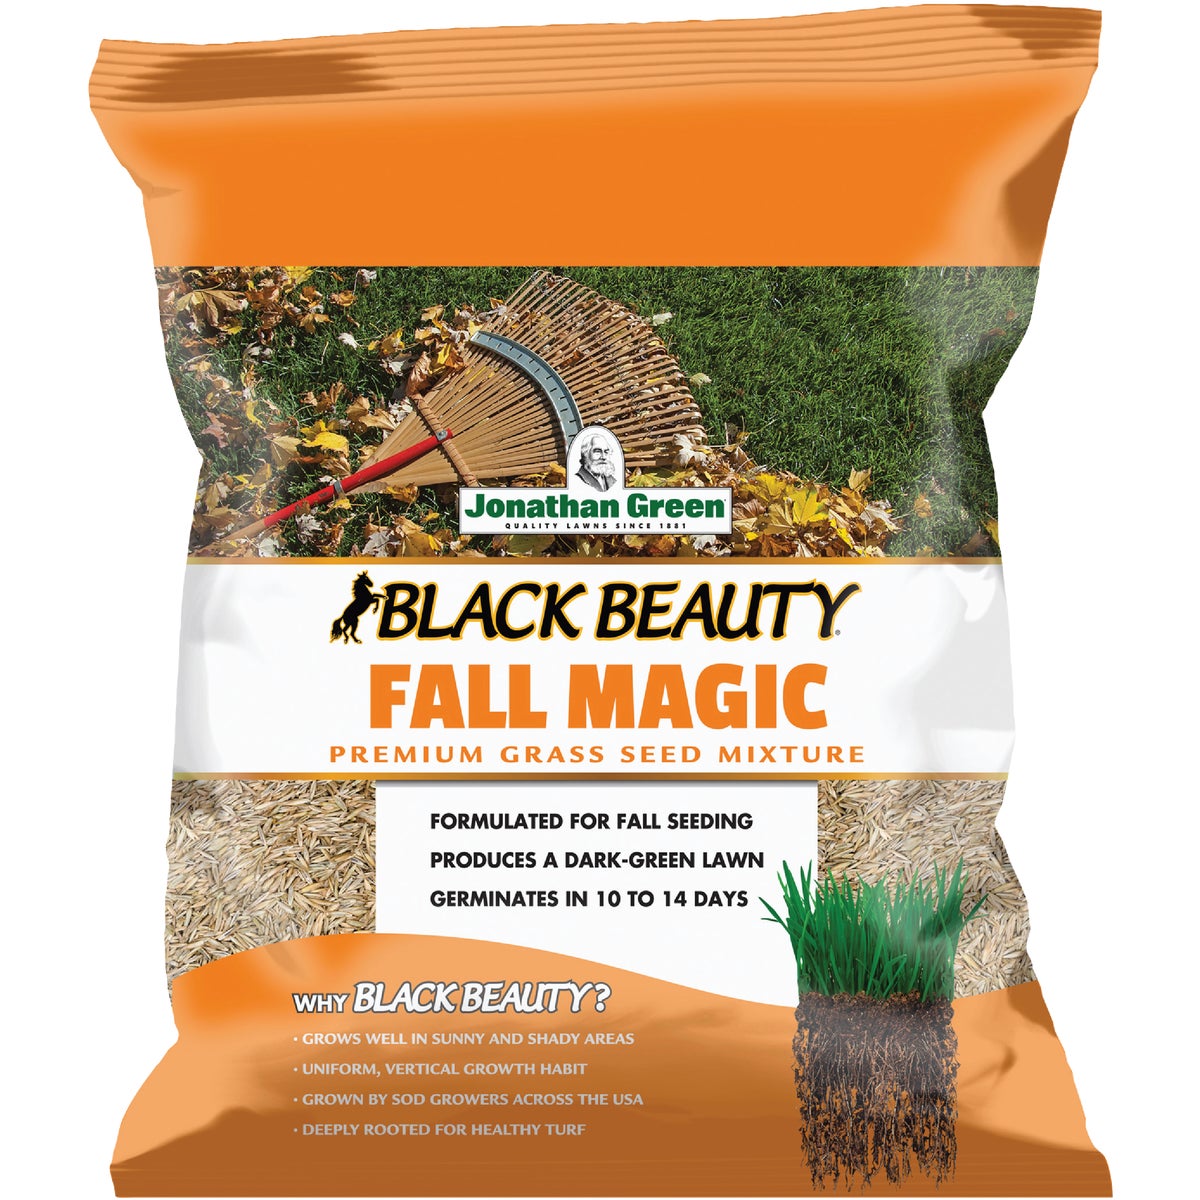 Item 703533, Fall Magic grass seed mixture.